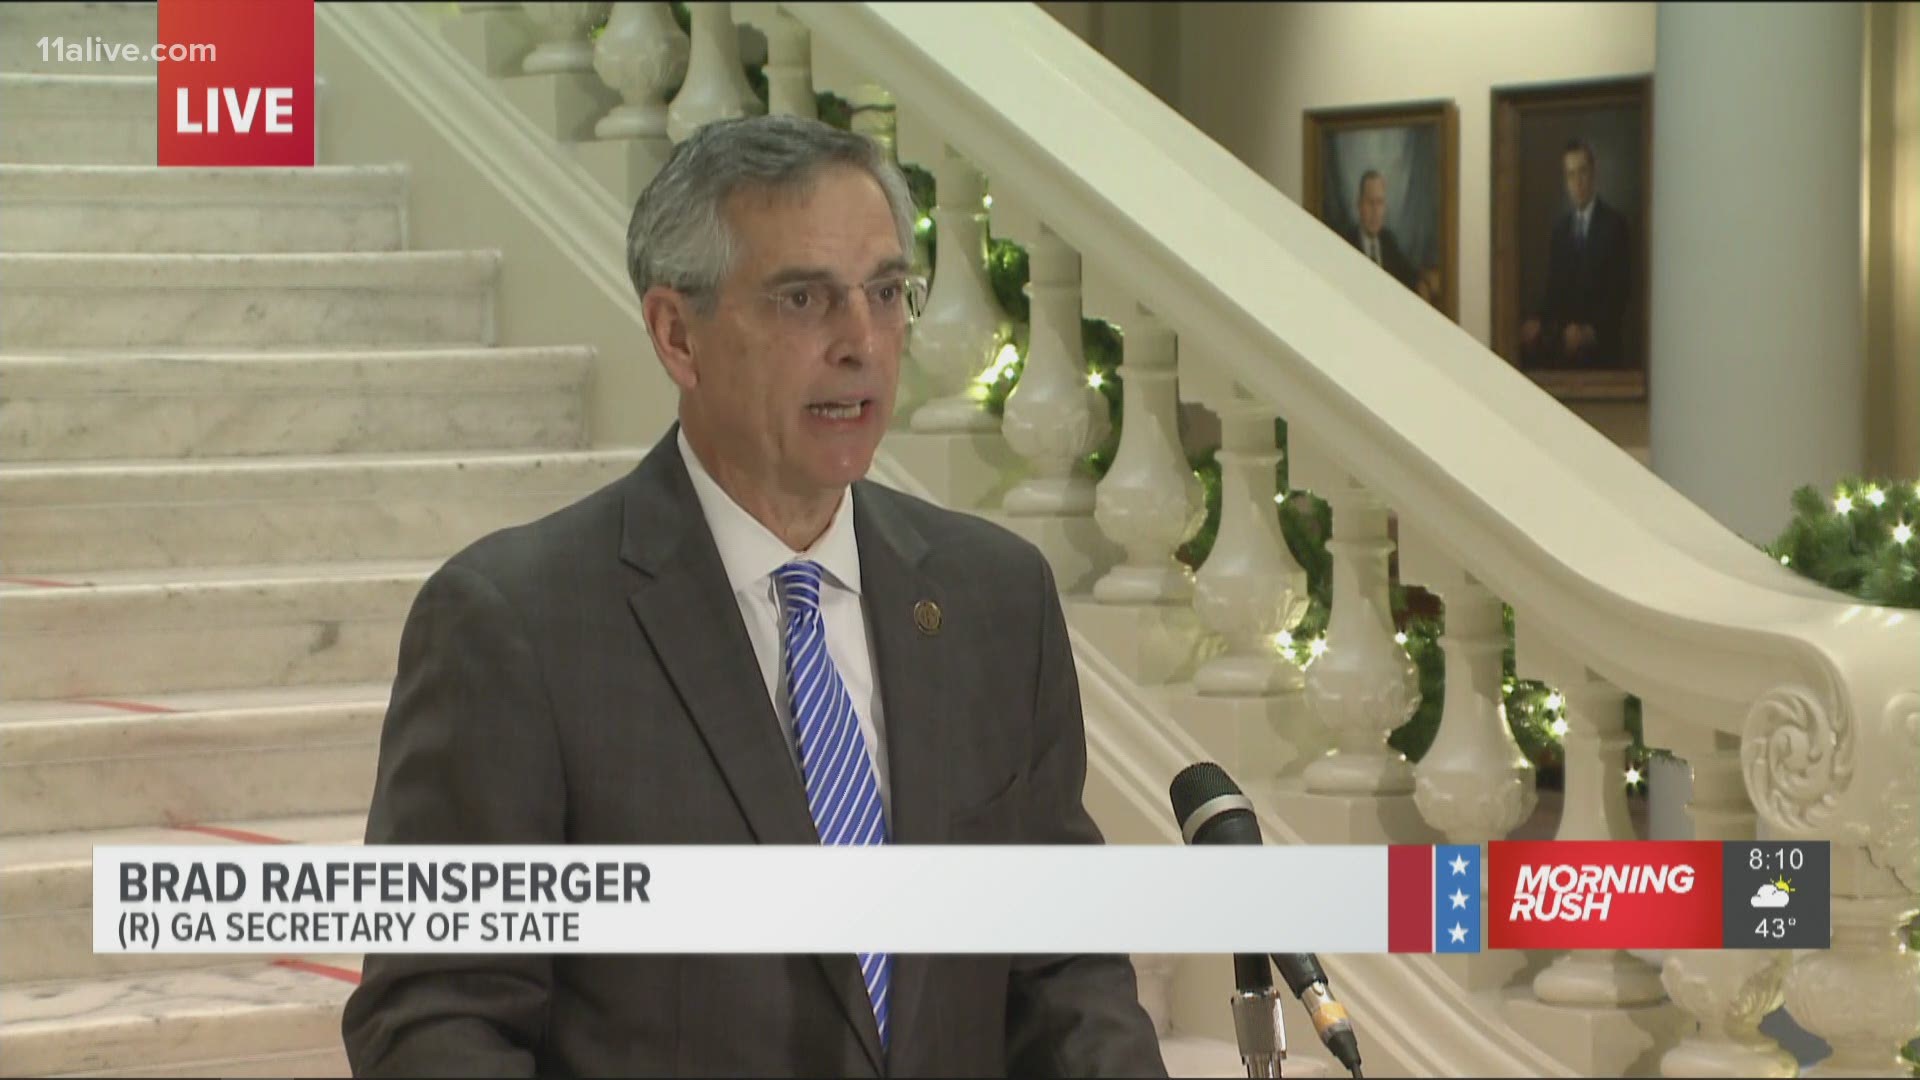 Secretary of State Brad Raffensperger said he wants to work with legislators to change laws around Georgia's voting system.